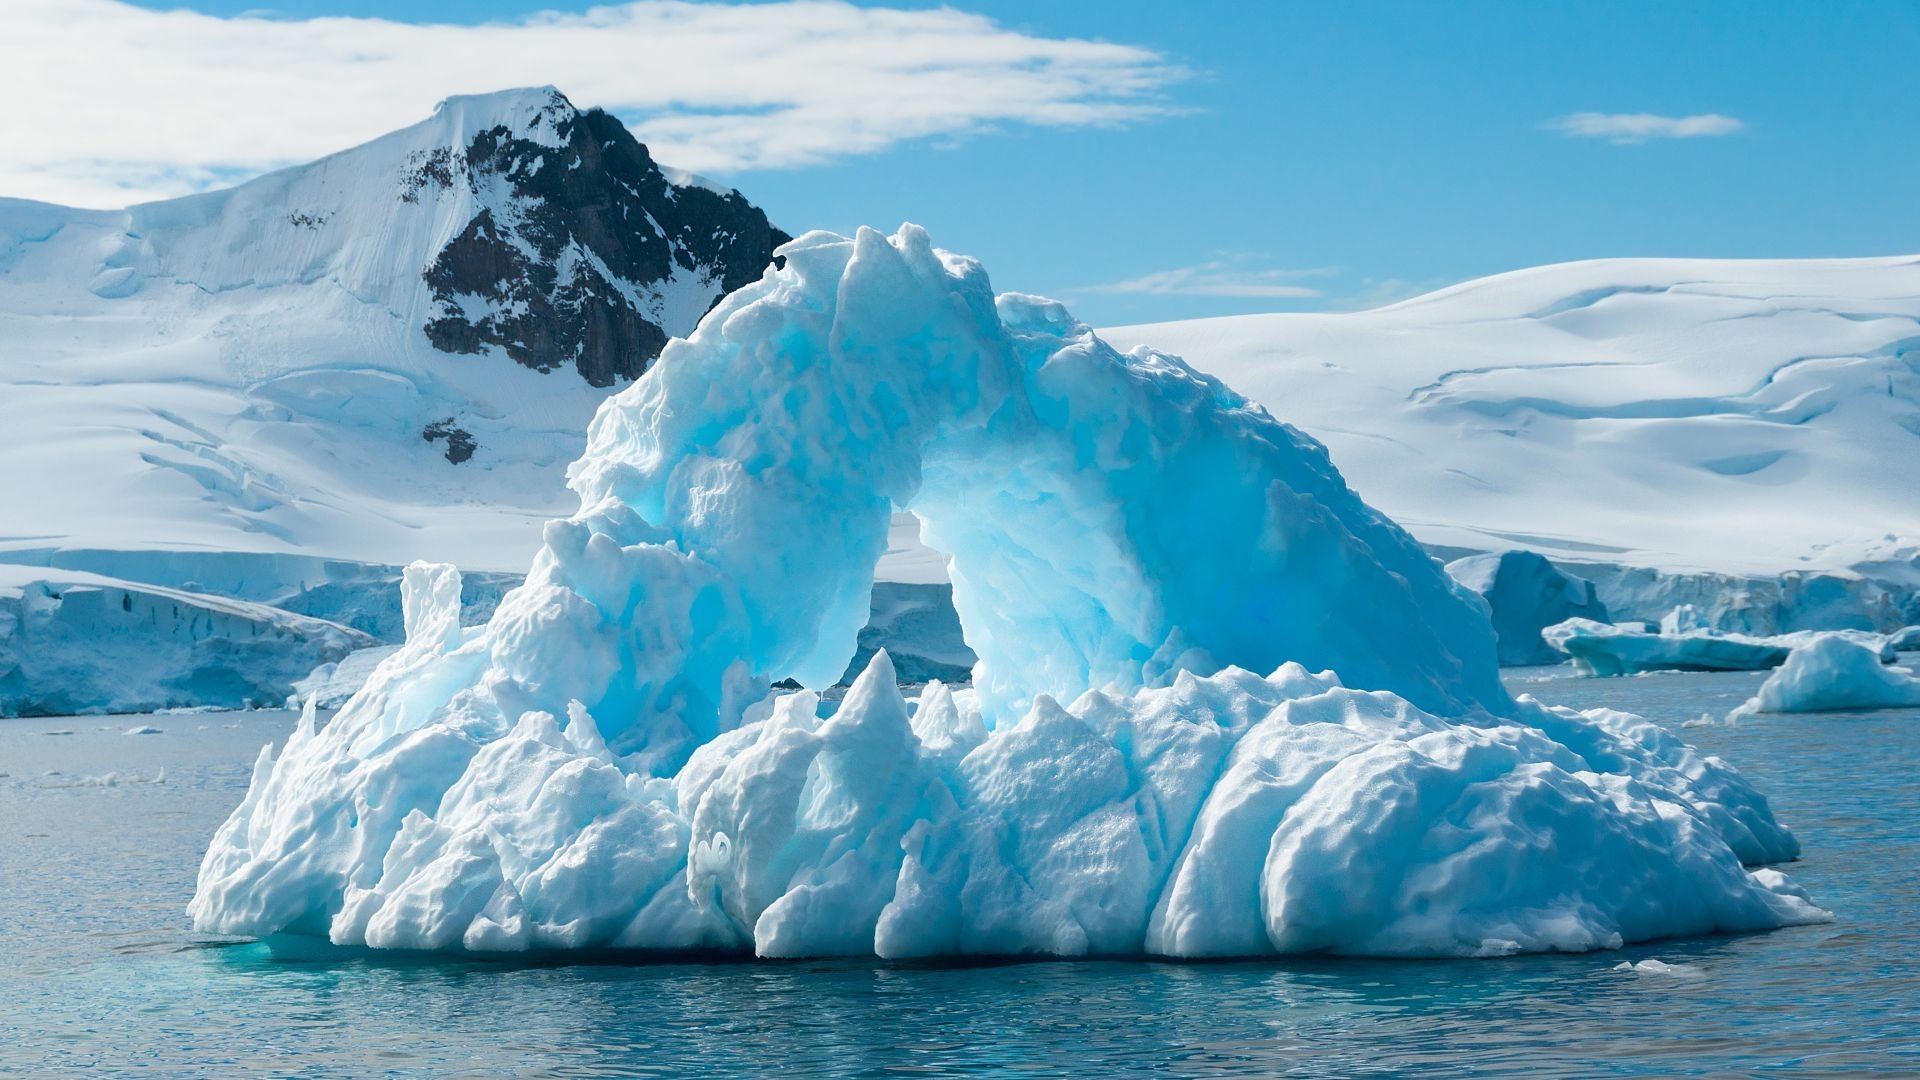 Antarctic beauty, Winter wonderland, Majestic mountains, Frozen serenity, 1920x1080 Full HD Desktop